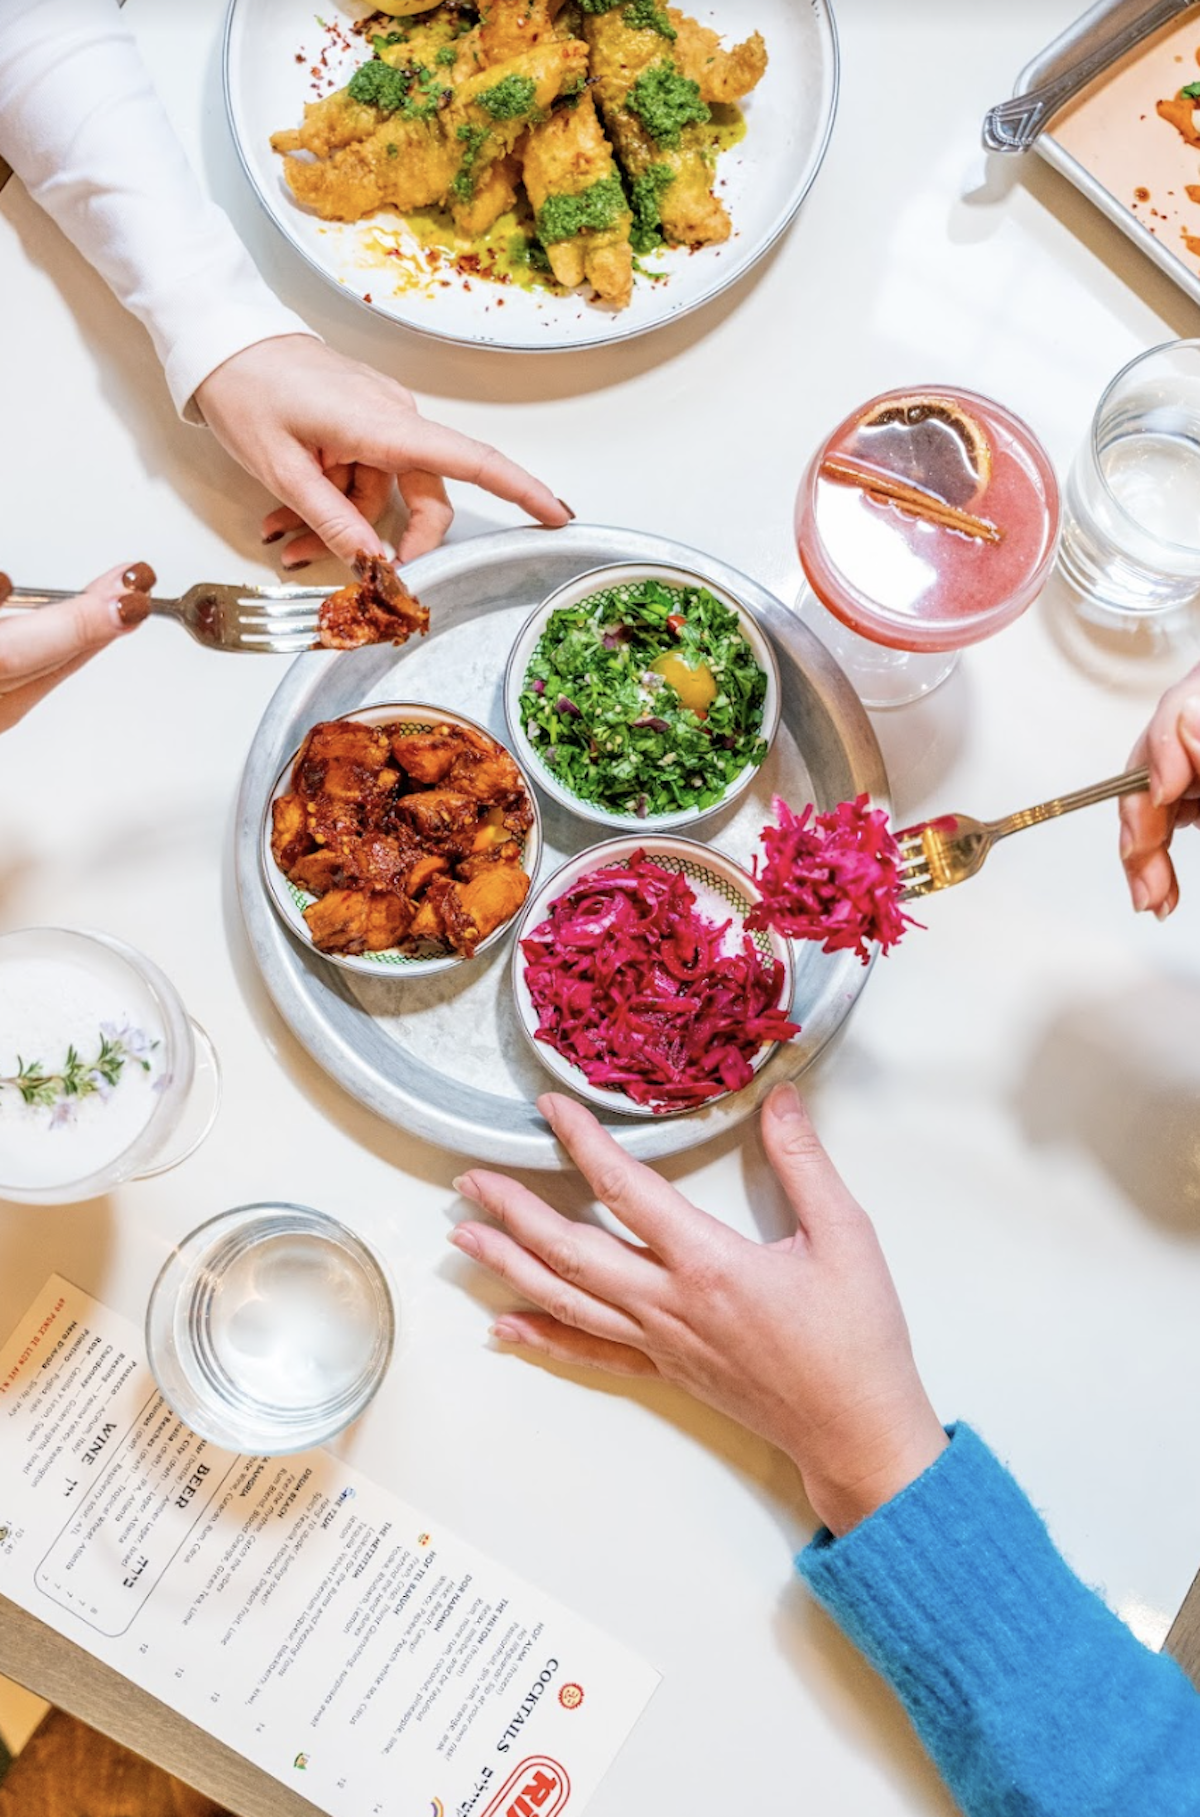 Rina, the Beloved Israeli-Style Eatery, to Open in Alpharetta’s Avalon Mid-2023